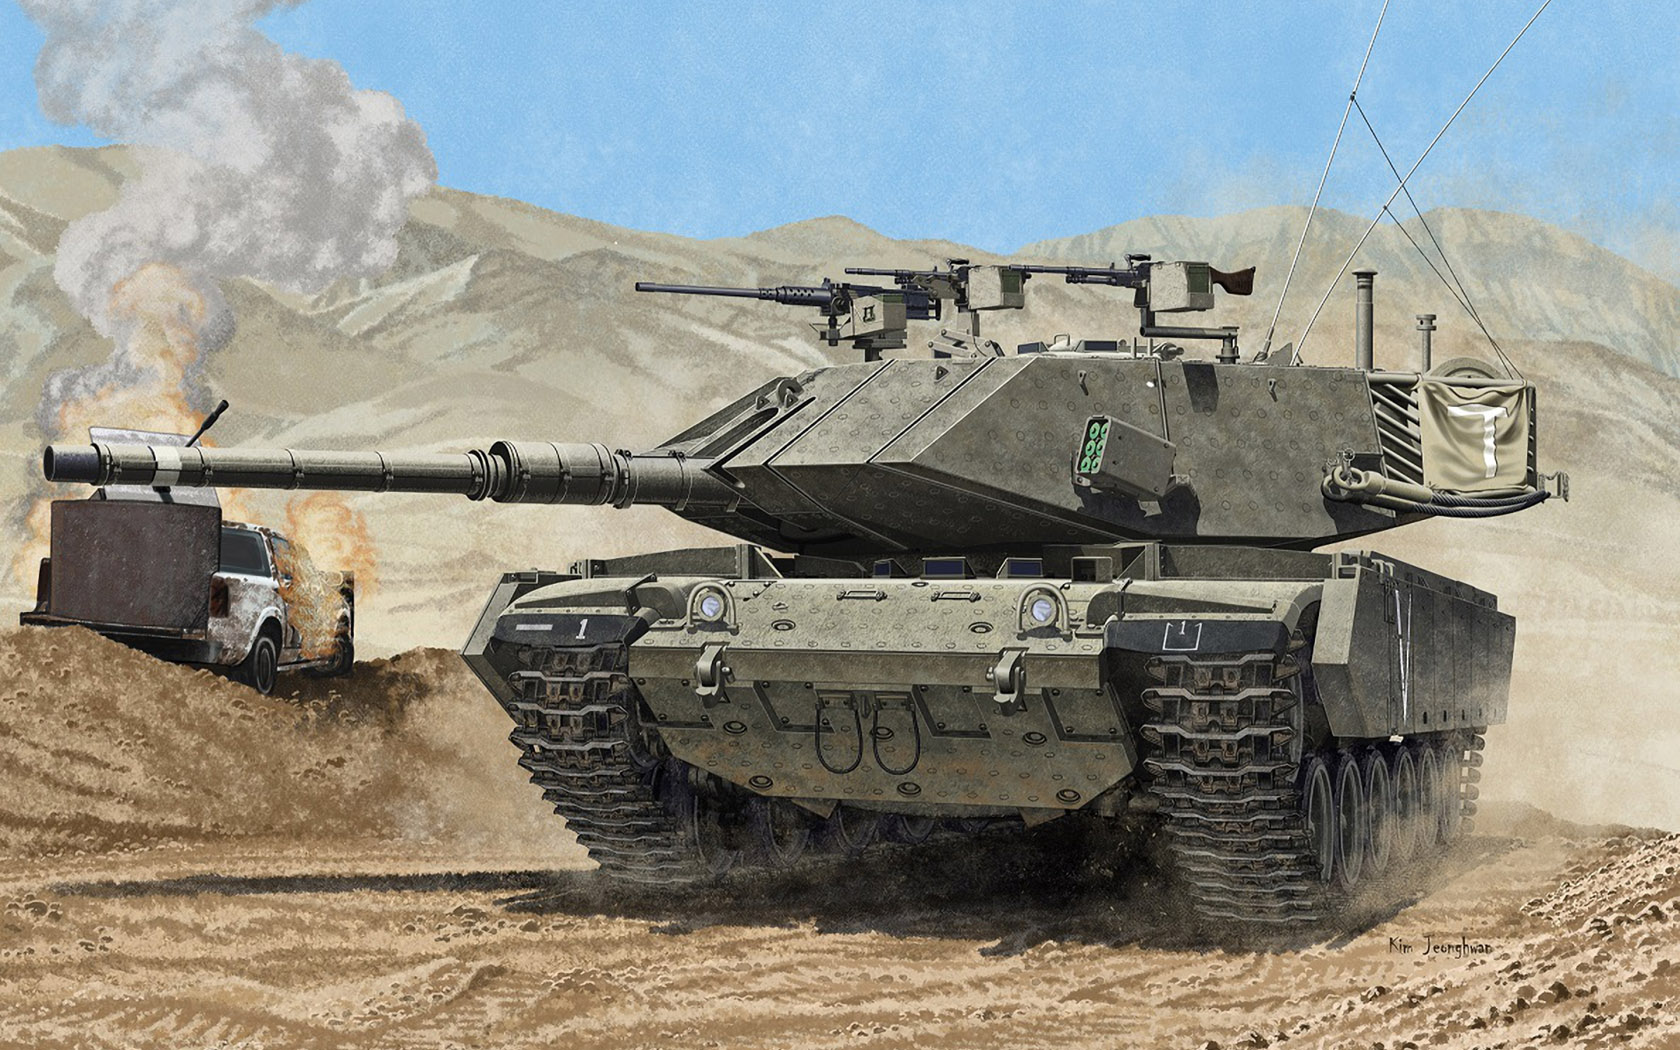 General 1680x1050 tank army military military vehicle artwork signature smoke Megach 7 American tanks Israeli tanks